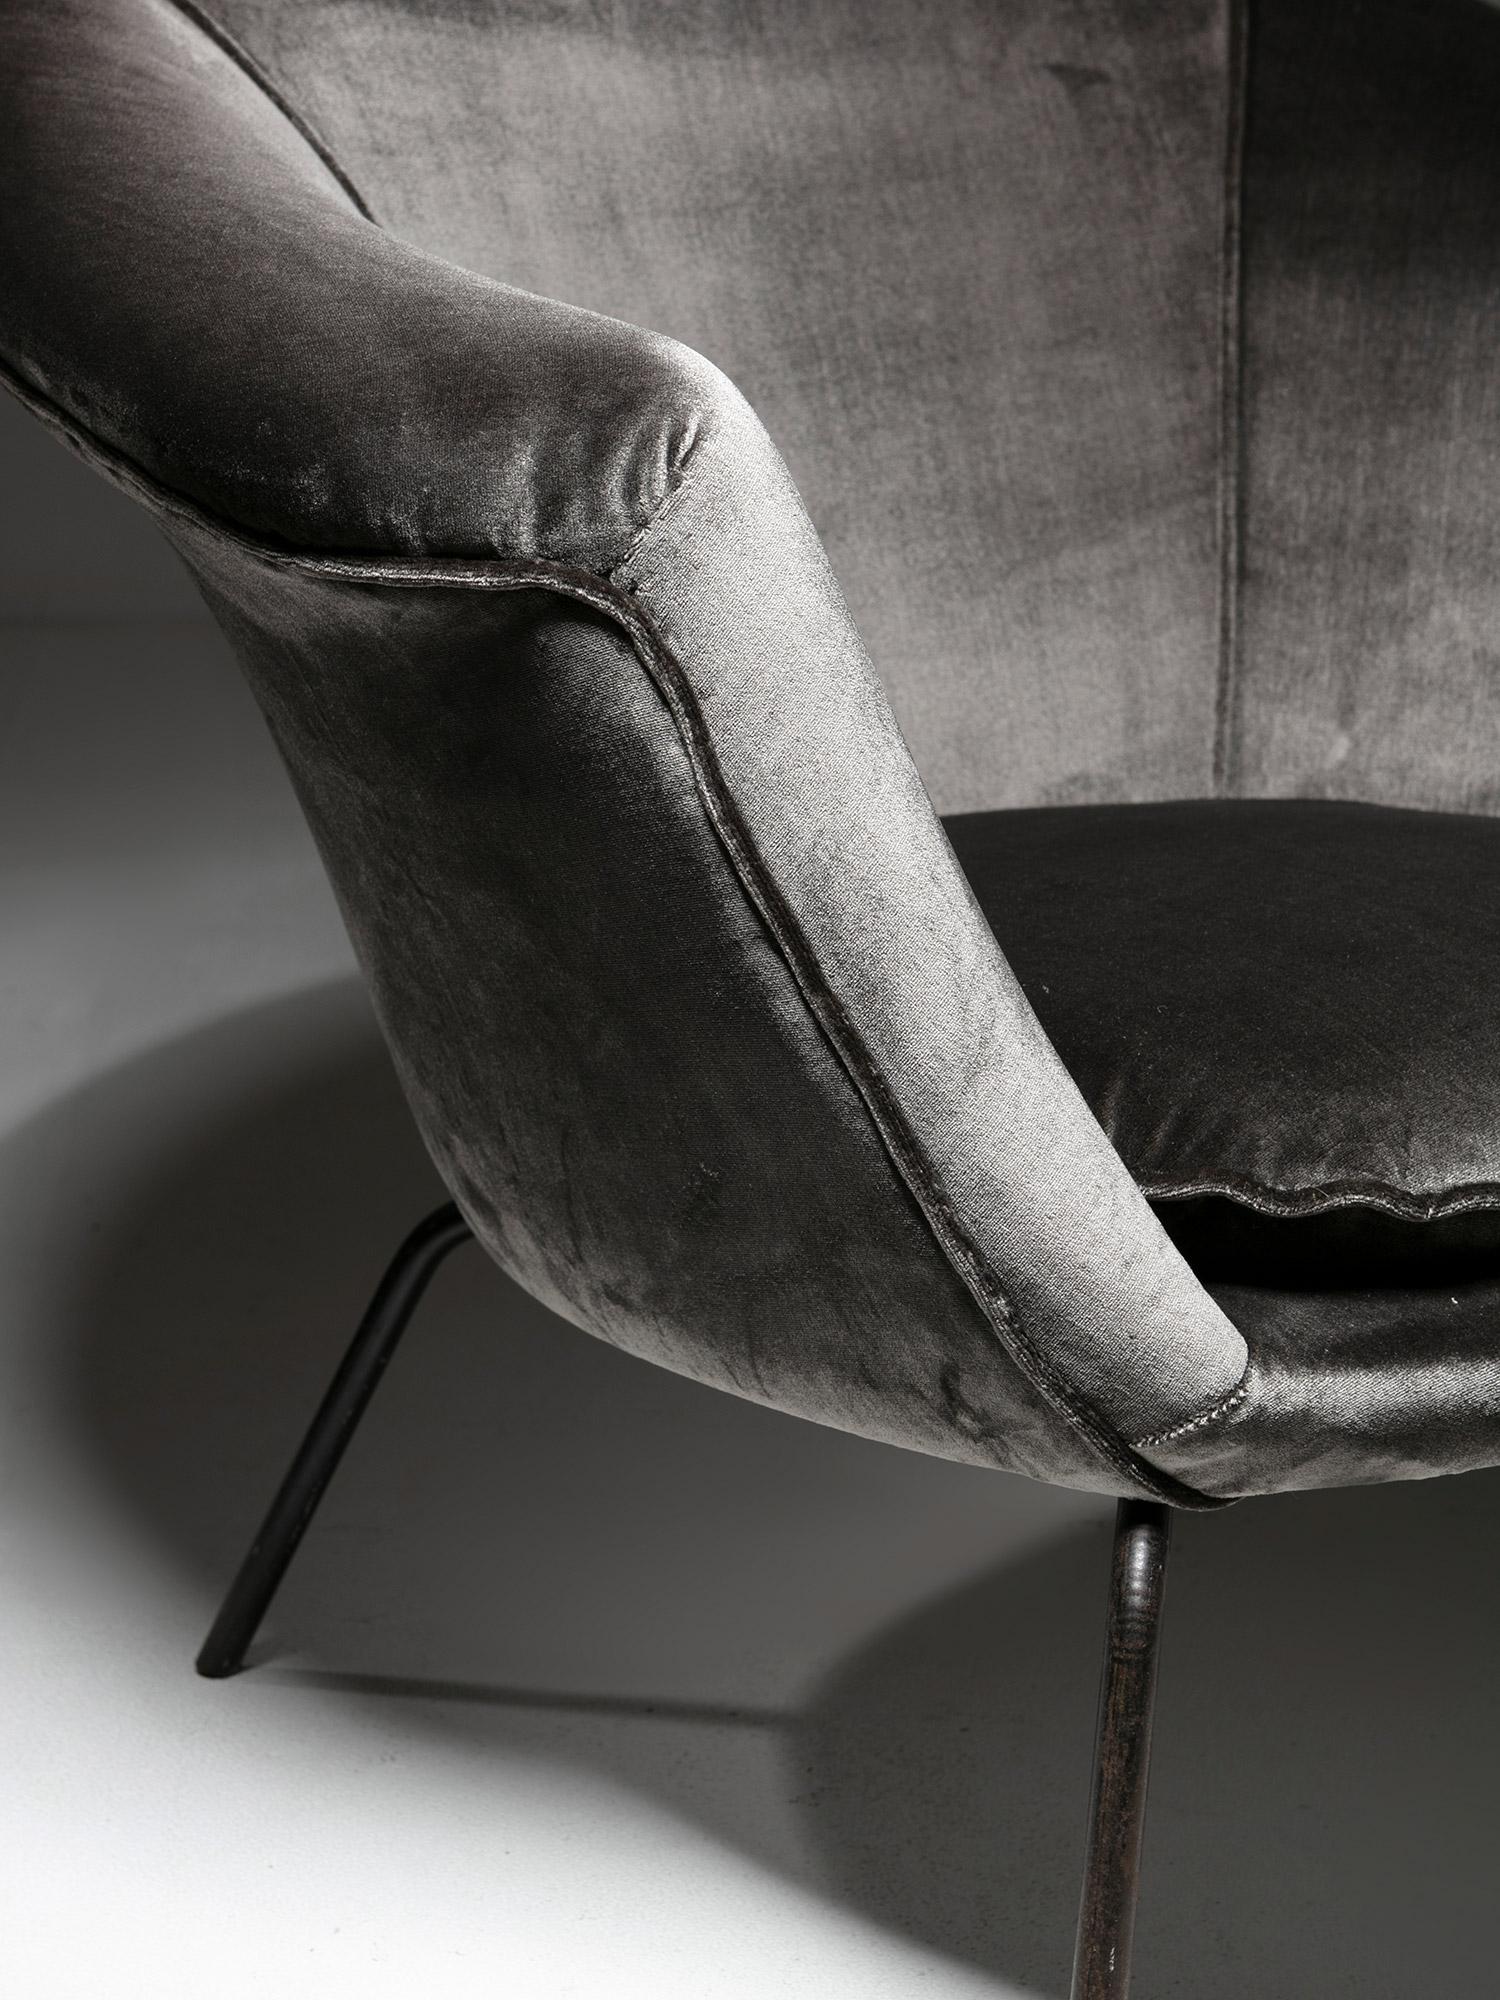 Velvet Lounge Chair Model 1003 by Henry W. Klein for Cassina, Italy, 1960s For Sale 1